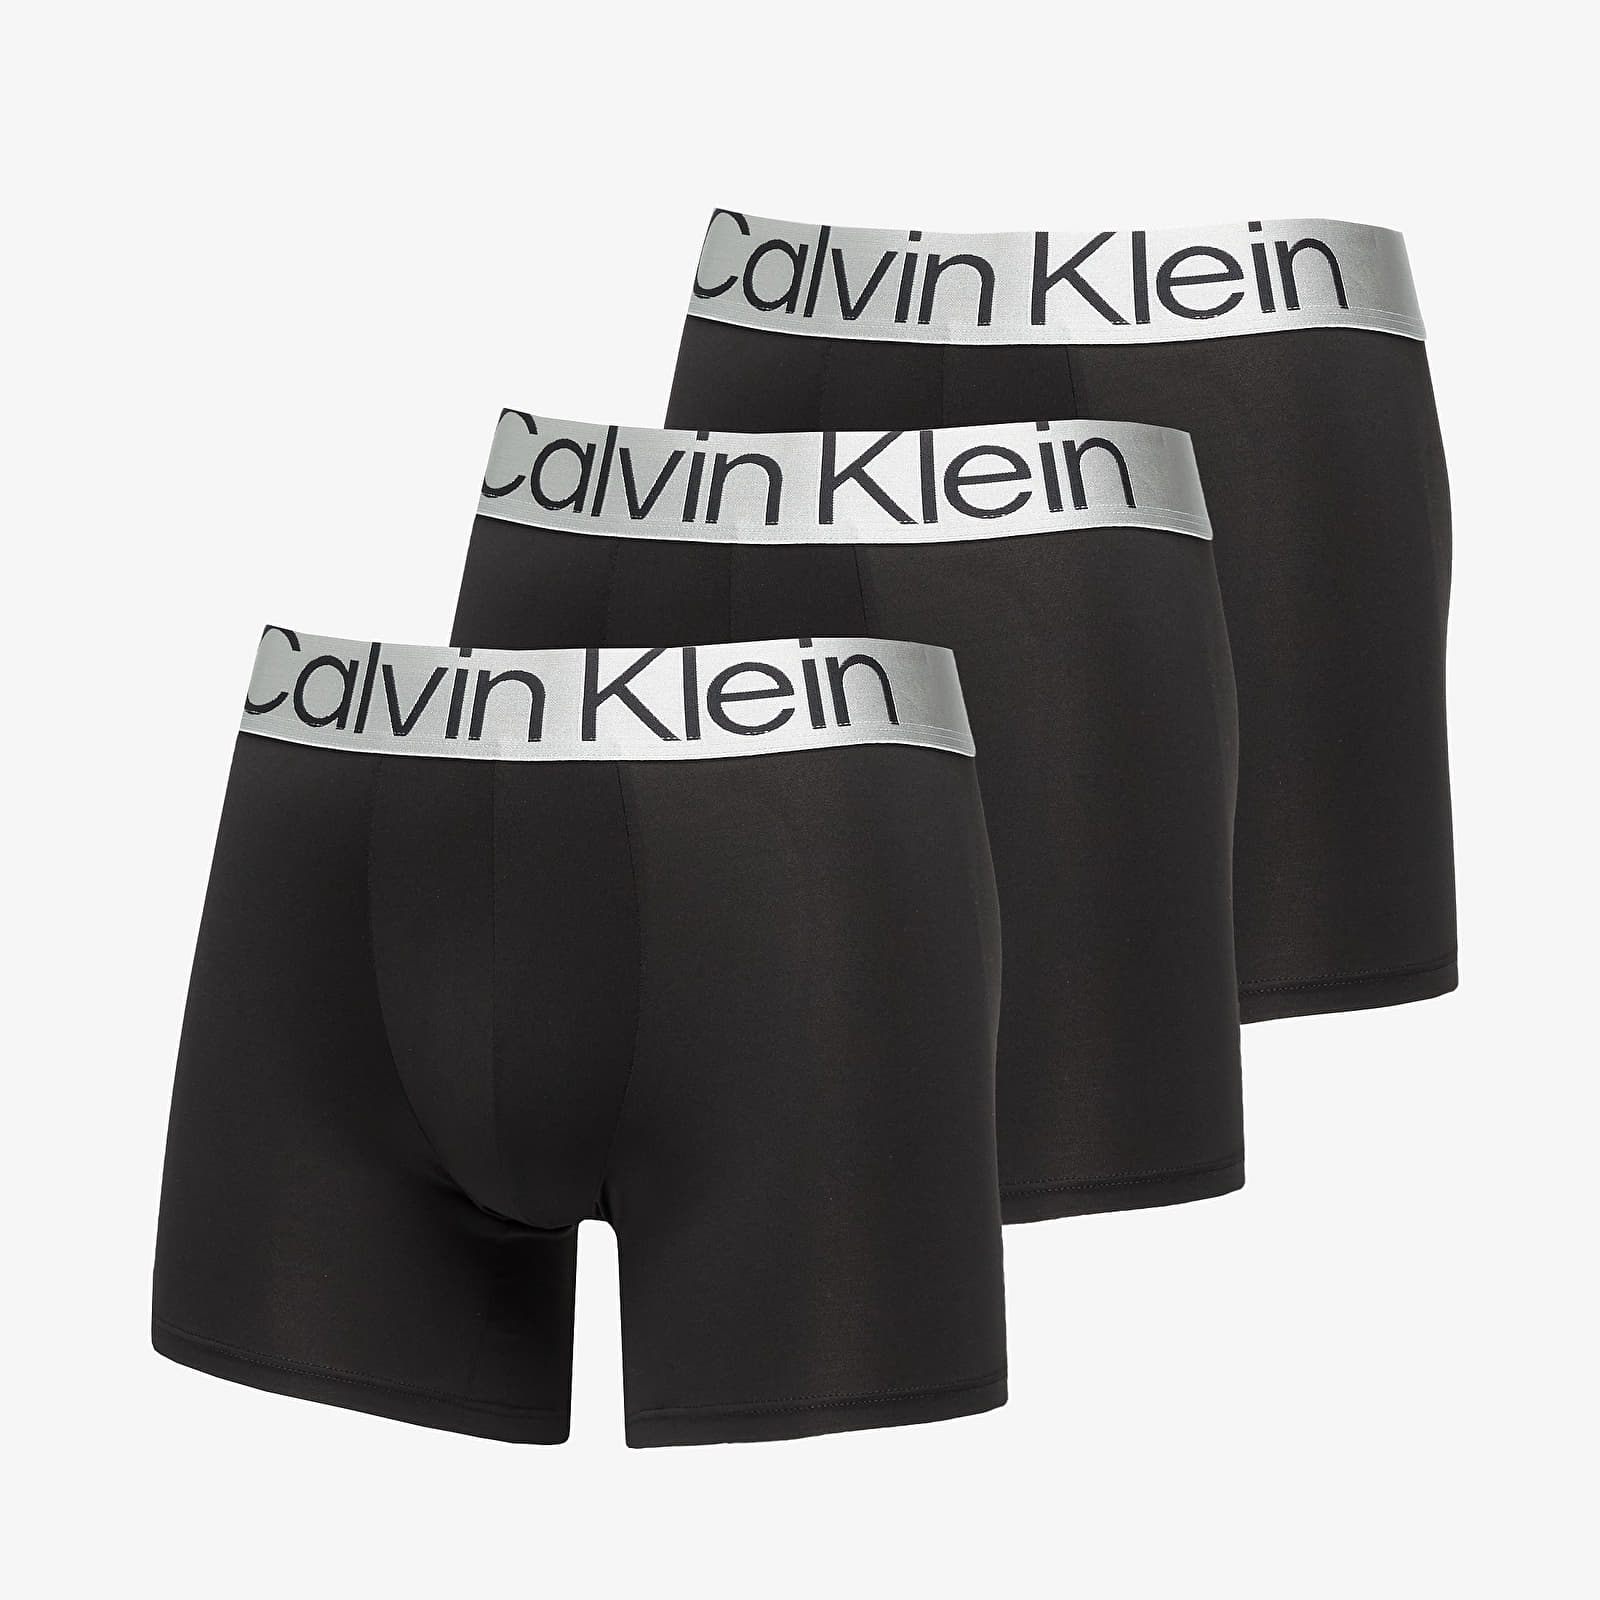 Boxer shorts Calvin Klein Reconsidered Steel Microfiber Boxer